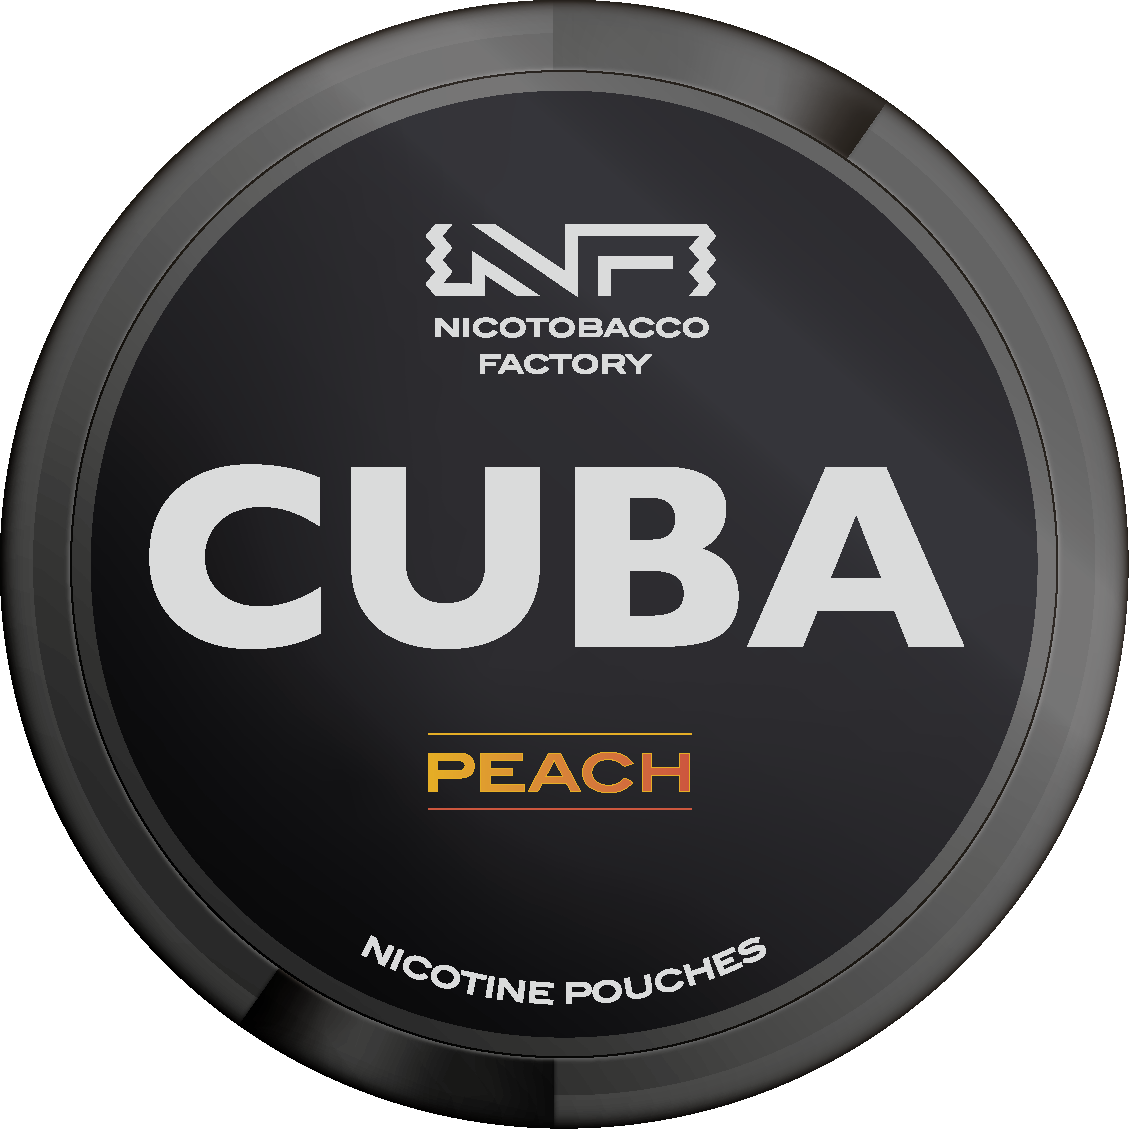 CUBA Black Peach